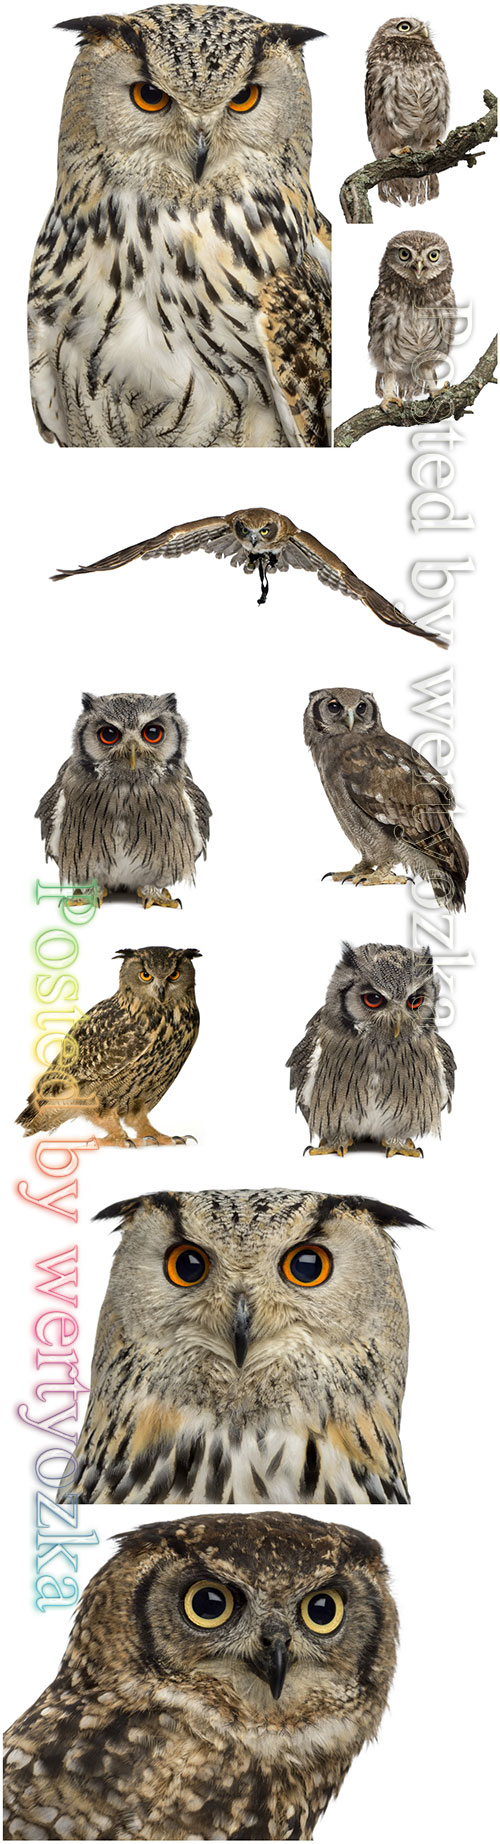 Owl beautiful stock photo